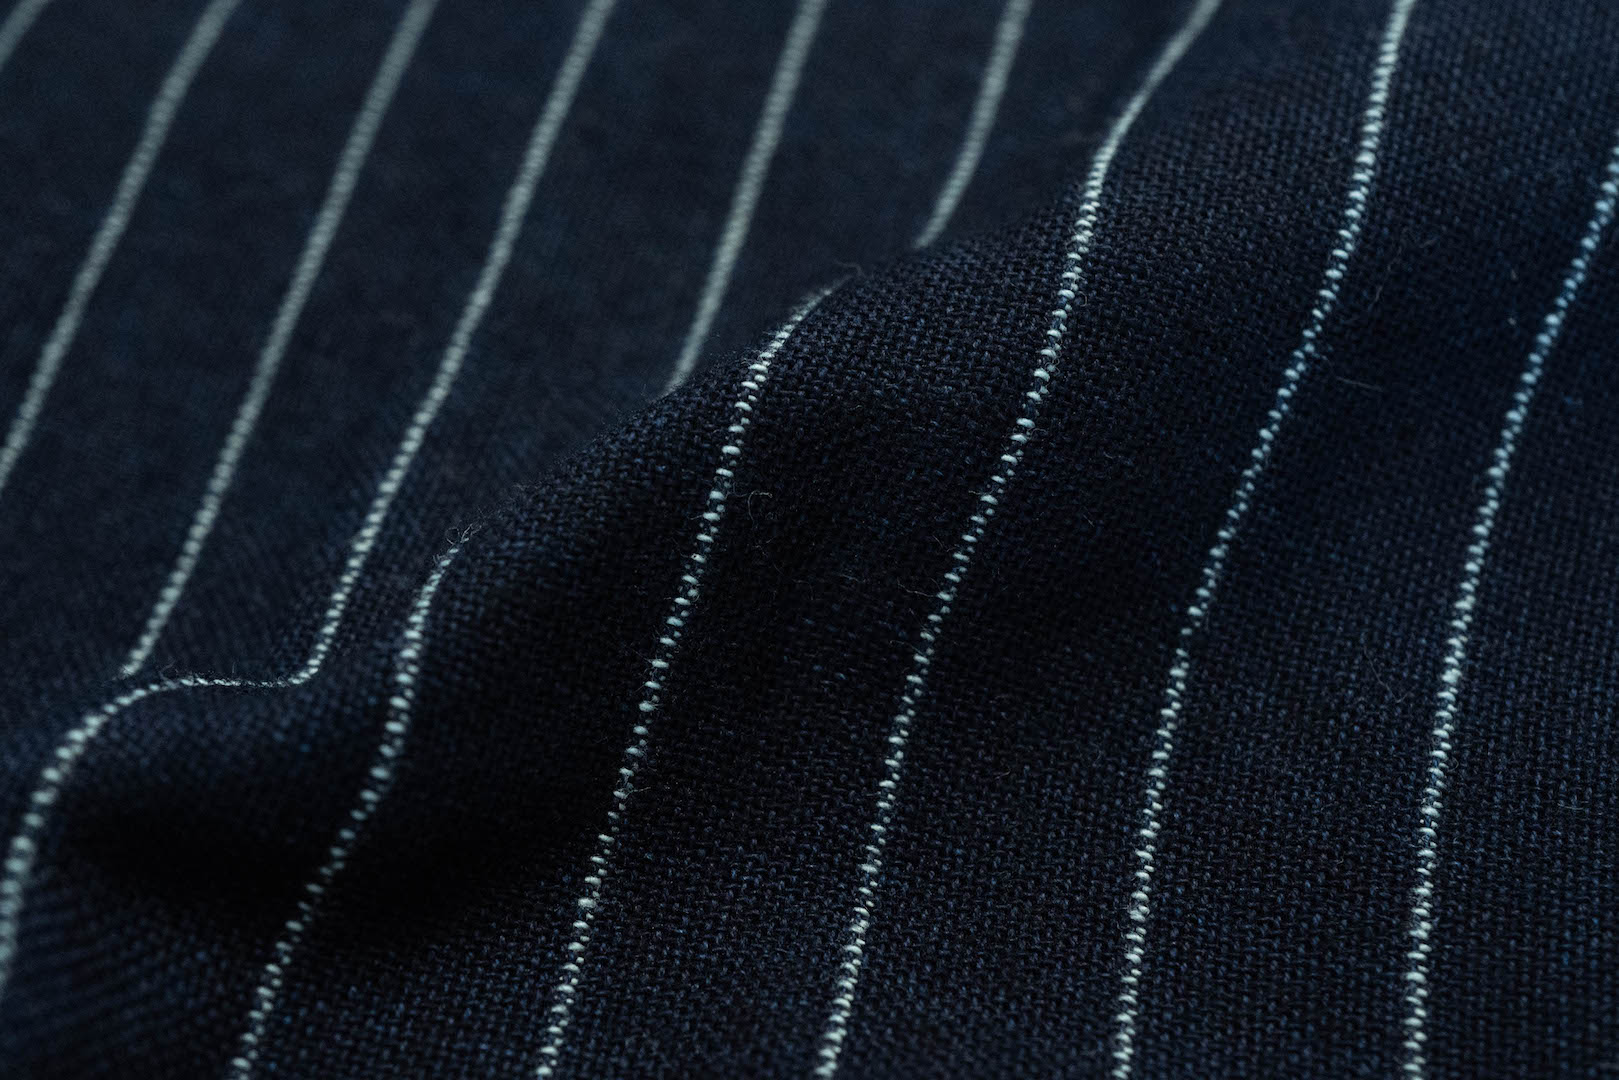 Pure Blue Japan Indigo Striped Wabash Gauze C.P.O Shirt